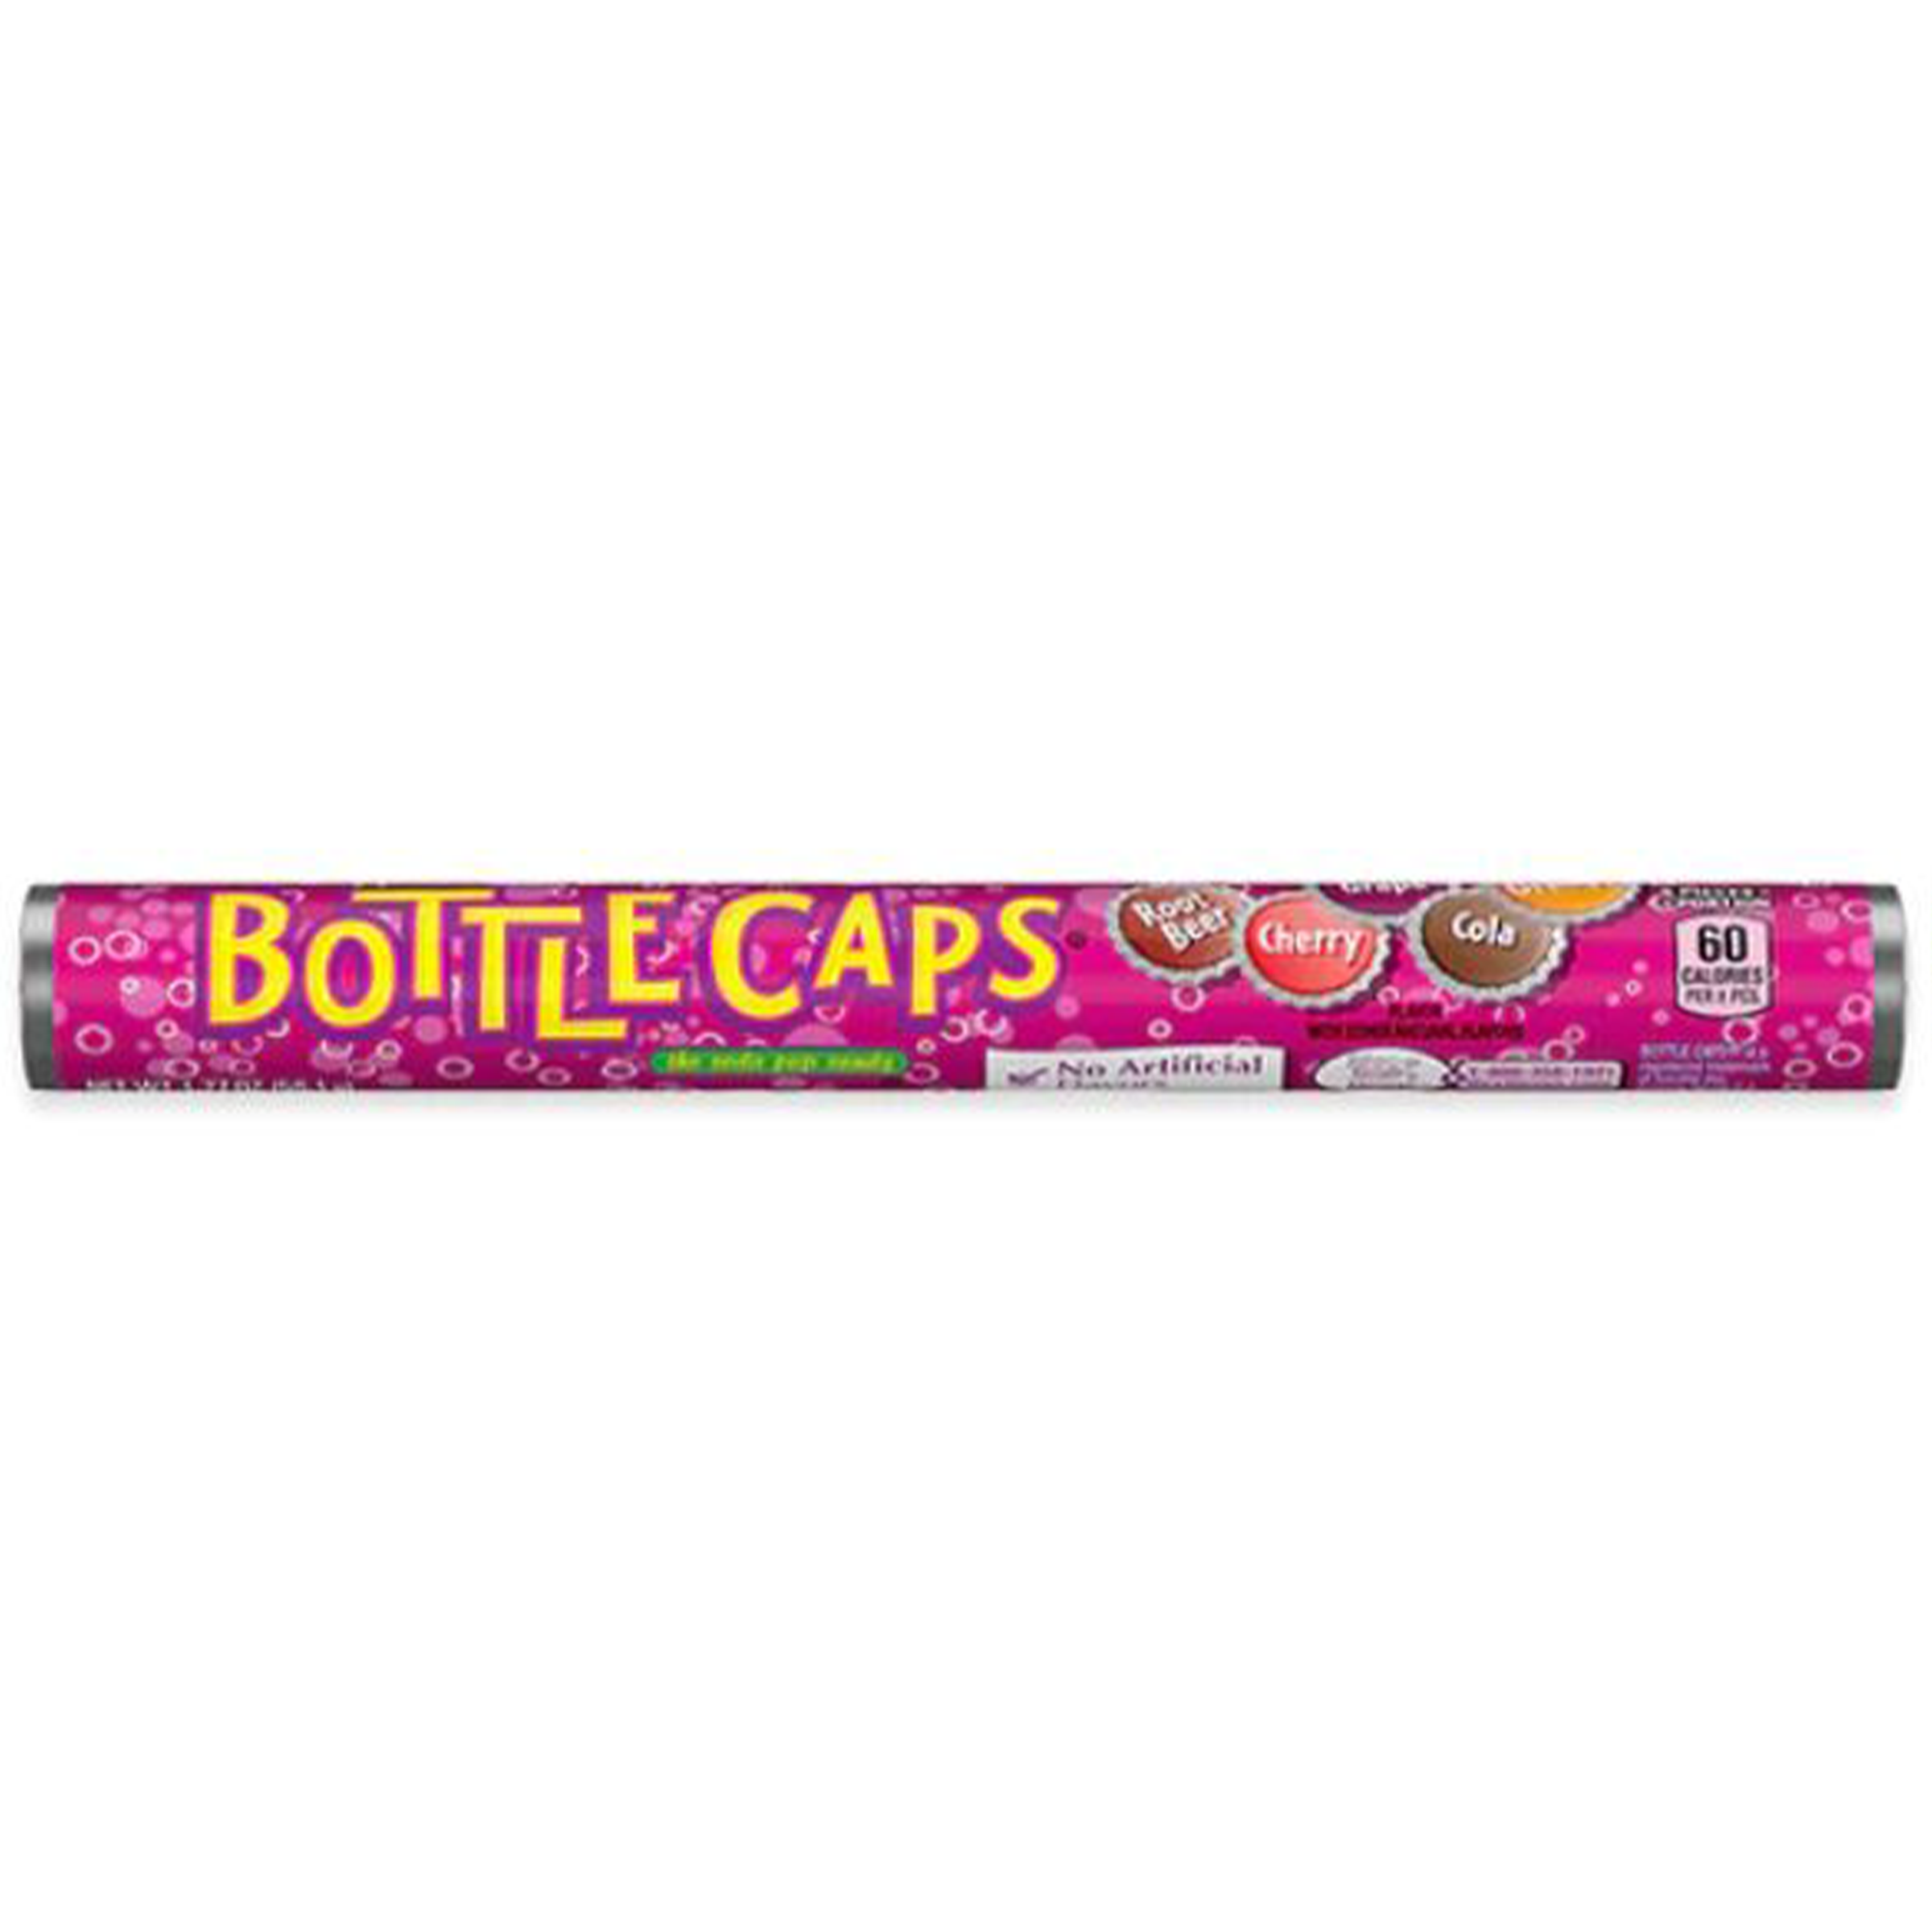 Bottle Caps Candy